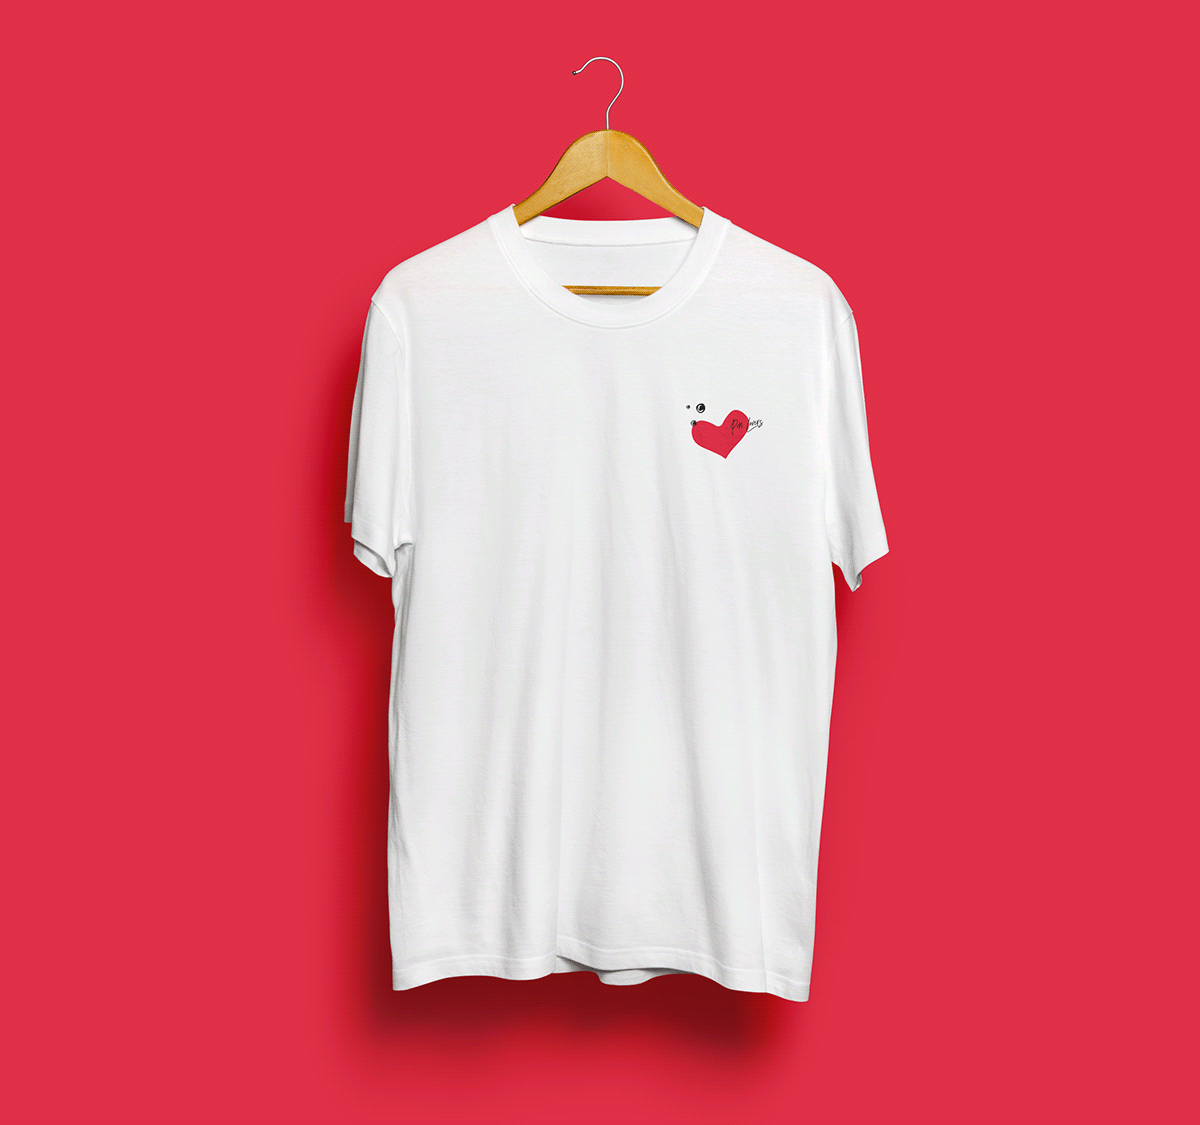 PINLOVERS ILLUSTRATION  clothes vectorart shape heart san valentine print serygraph concept